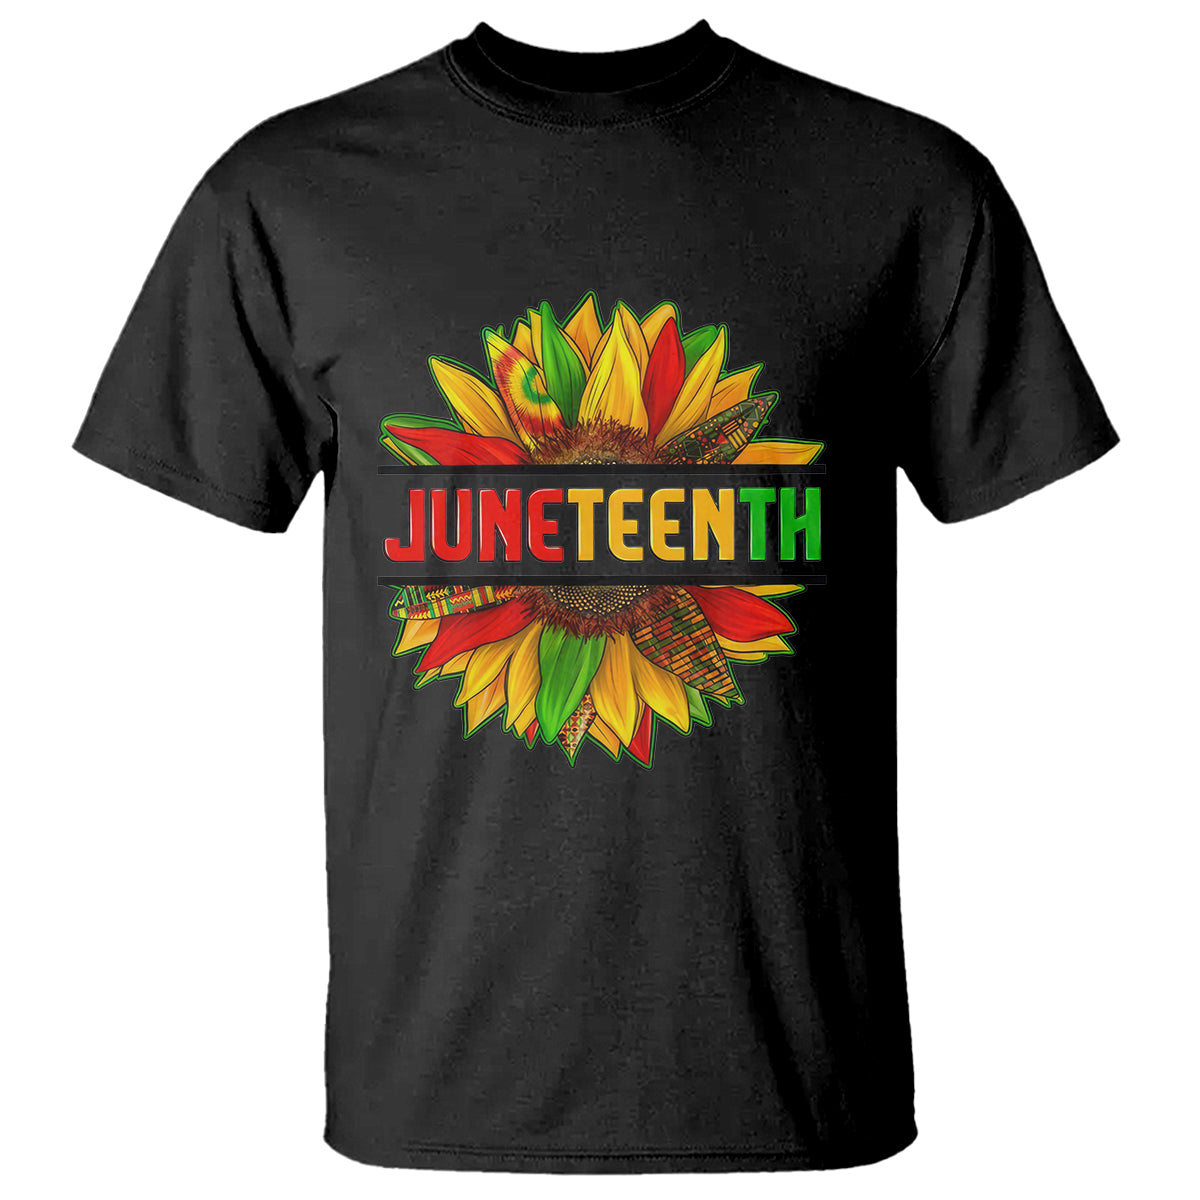 Juneteenth T Shirt Sunflower with Fist Black History TS01 Black Printyourwear